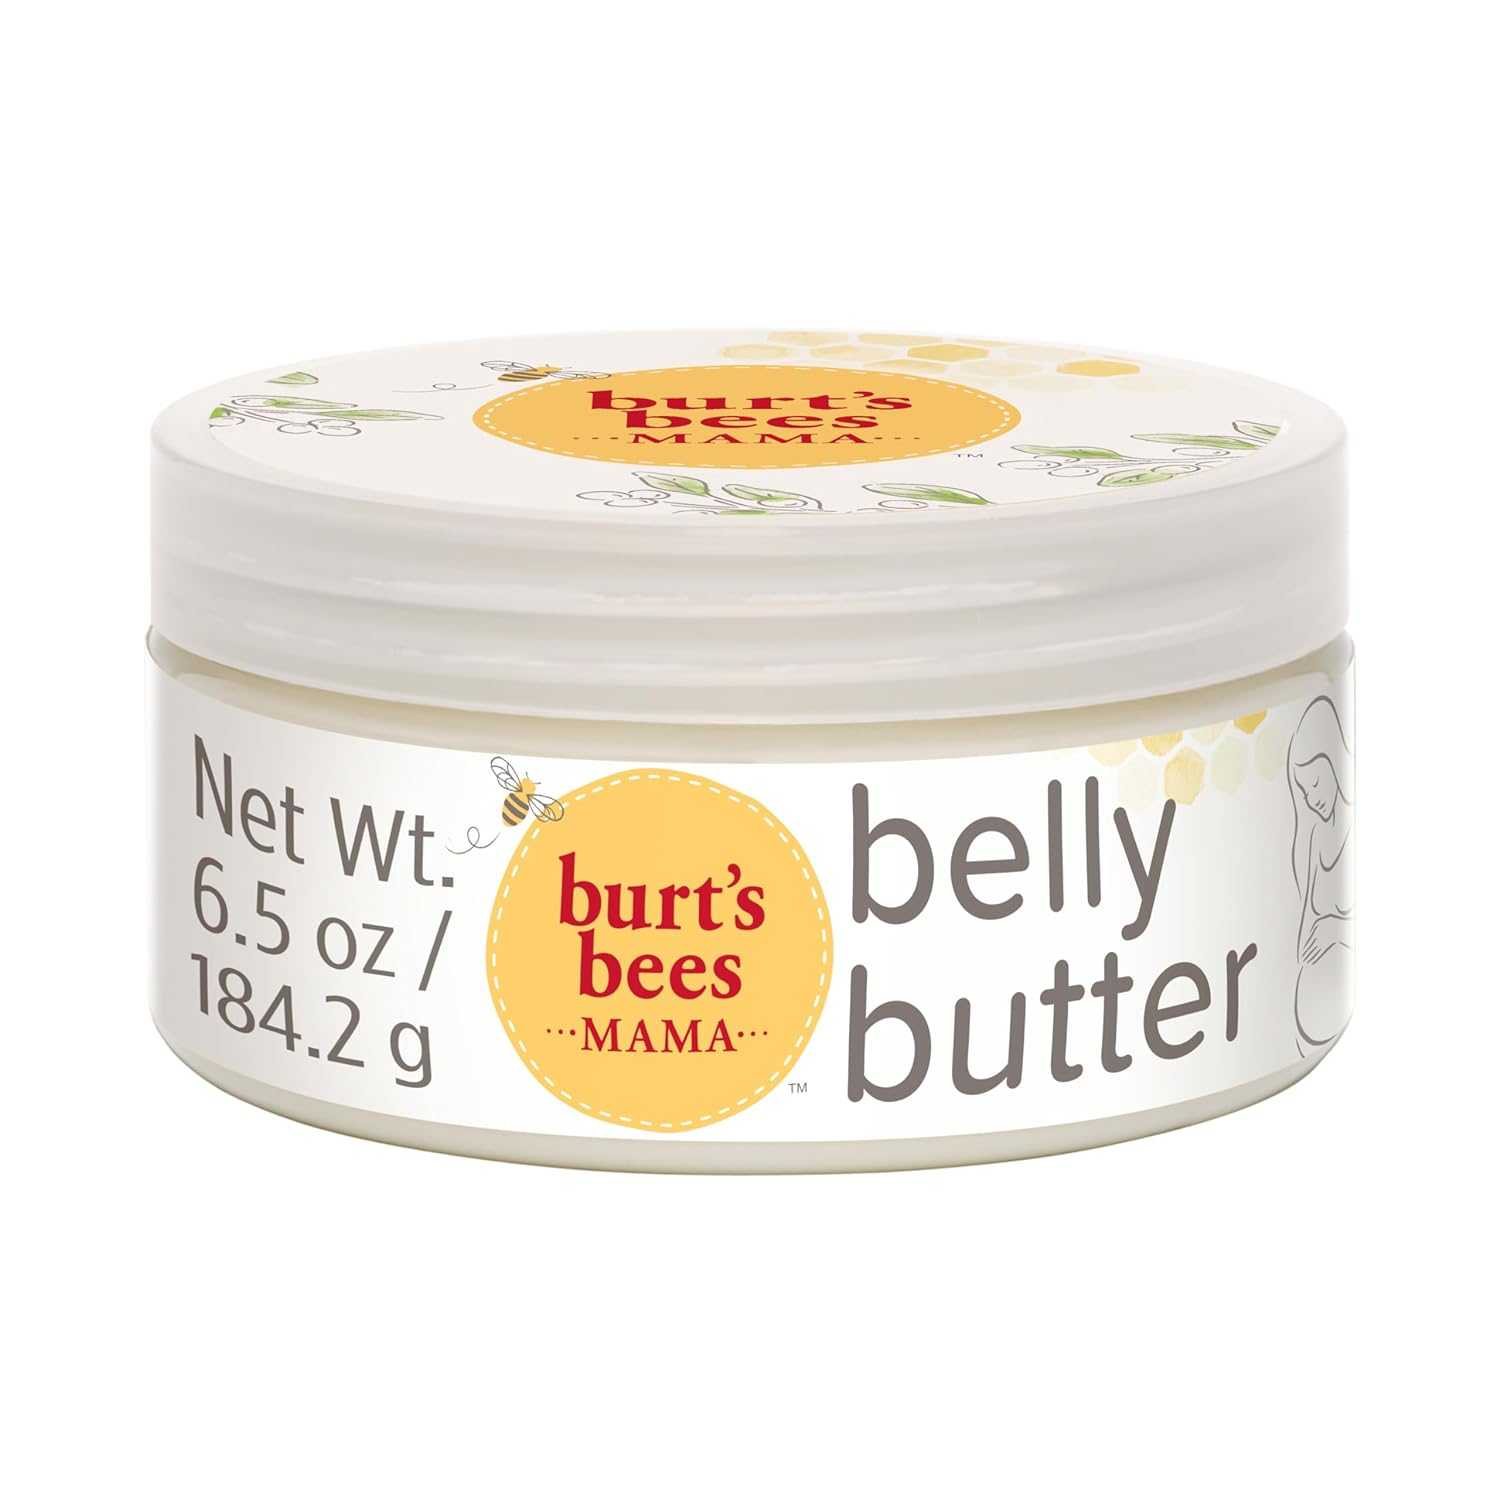 Burt’s Bees Mama Bee Belly Butter